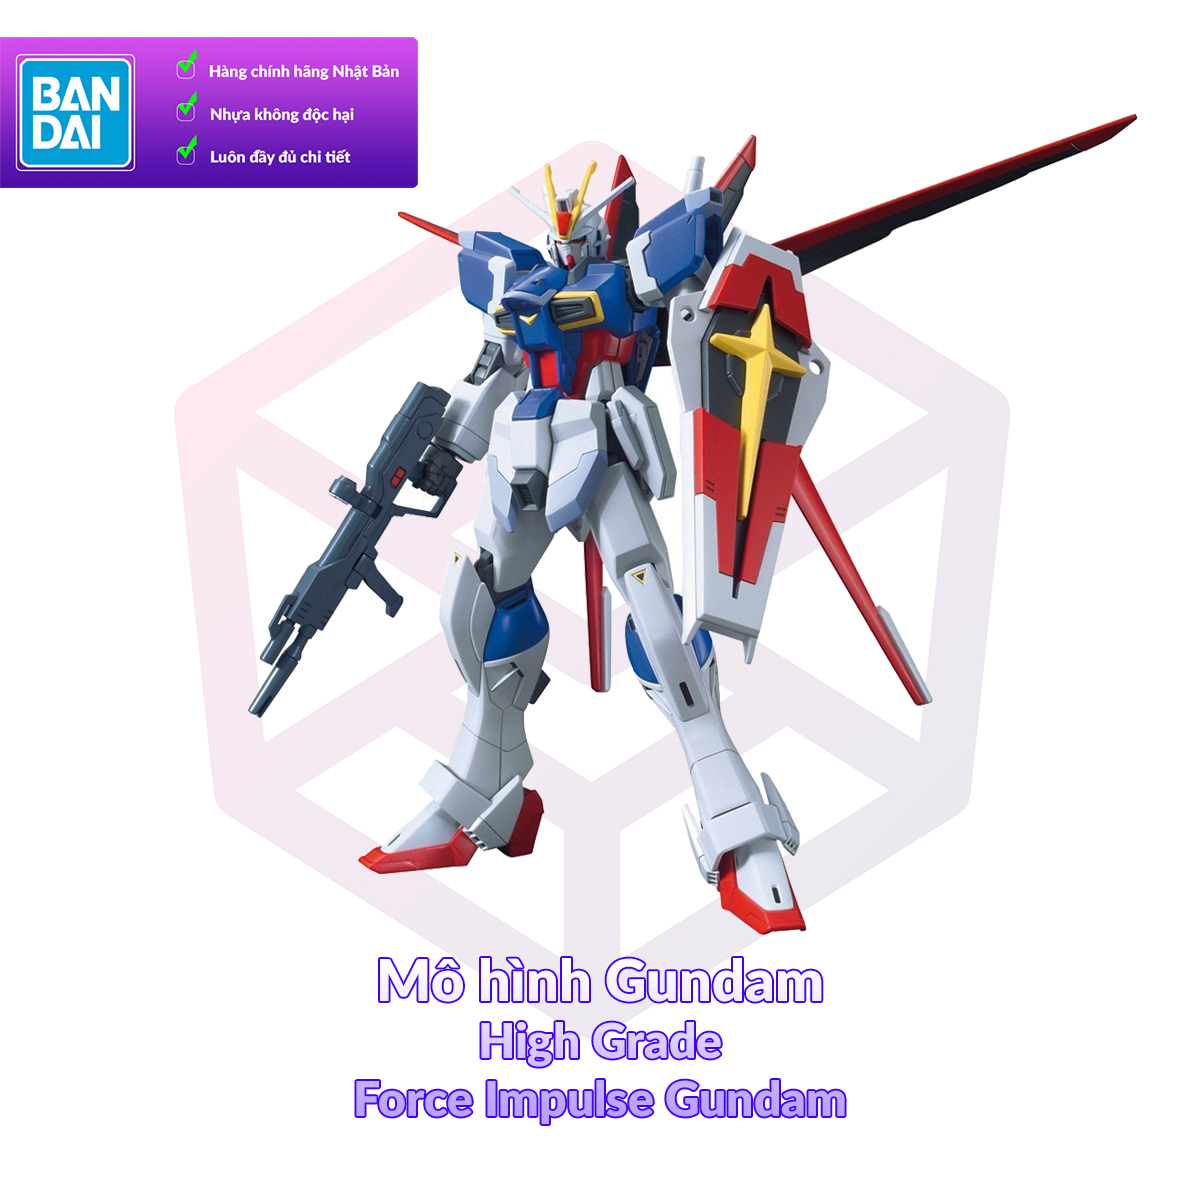 7-11 12 VOUCHER 8%Mô Hình Gundam Bandai HG 198 Force Impulse Gundam 1 144